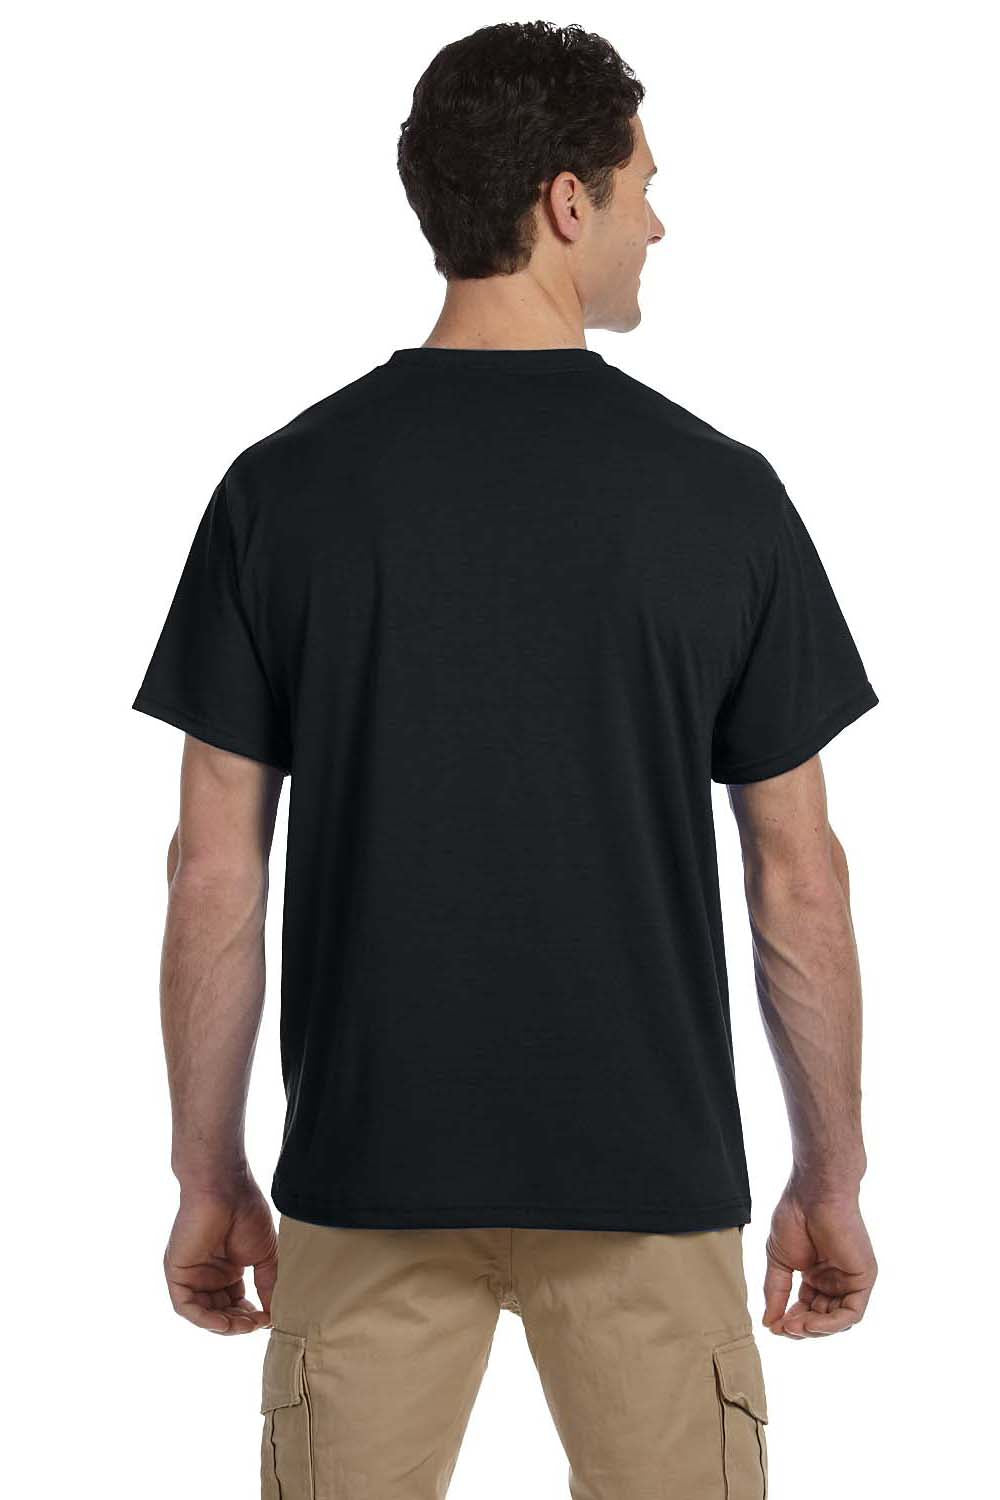 Jerzees 21M Mens Dri-Power Moisture Wicking Short Sleeve Crewneck T-Shirt Black Back